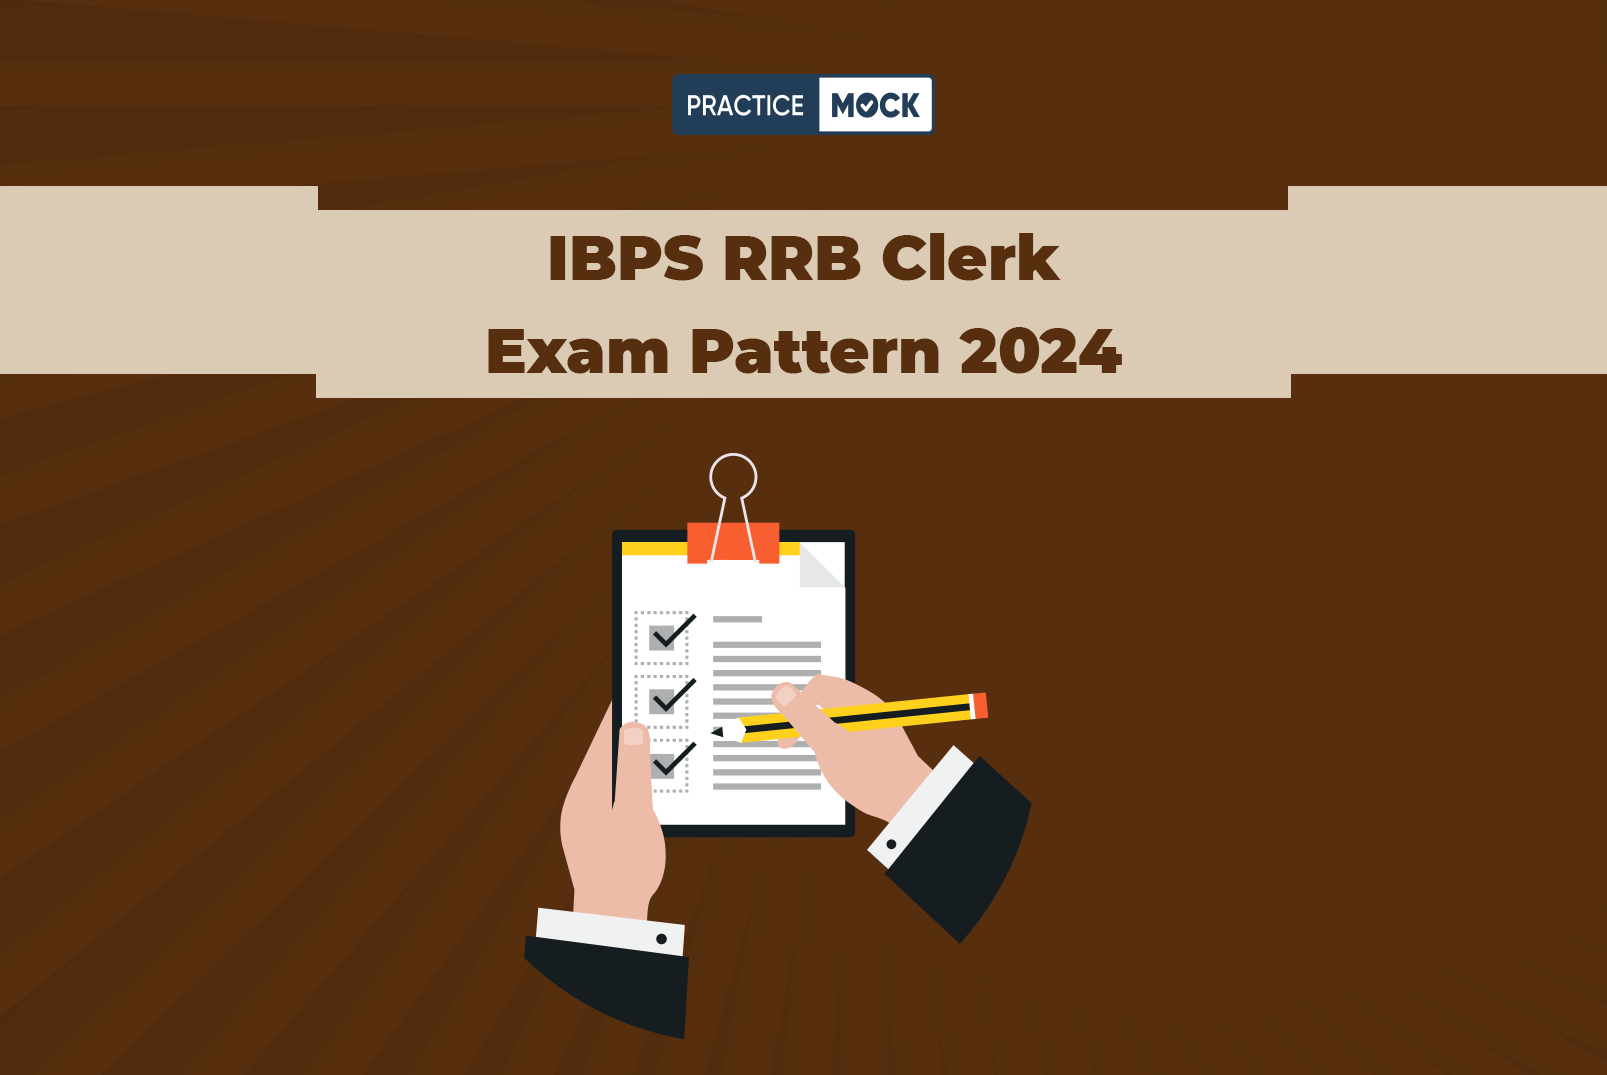 IBPS RRB Clerk Exam Pattern 2024